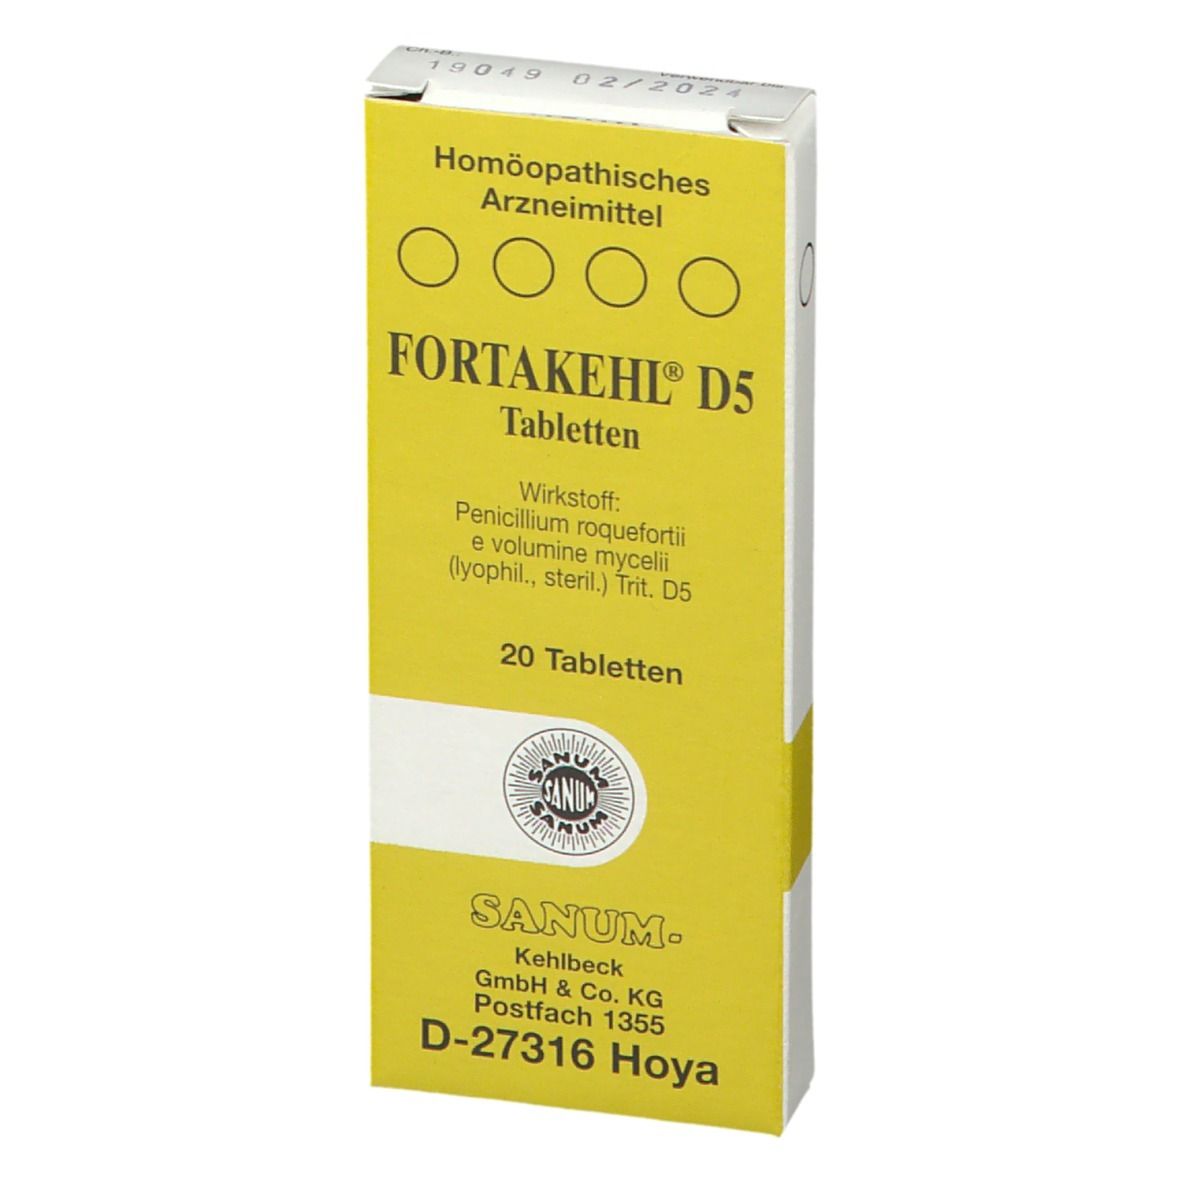 Fortakehl® D5 Tabletten